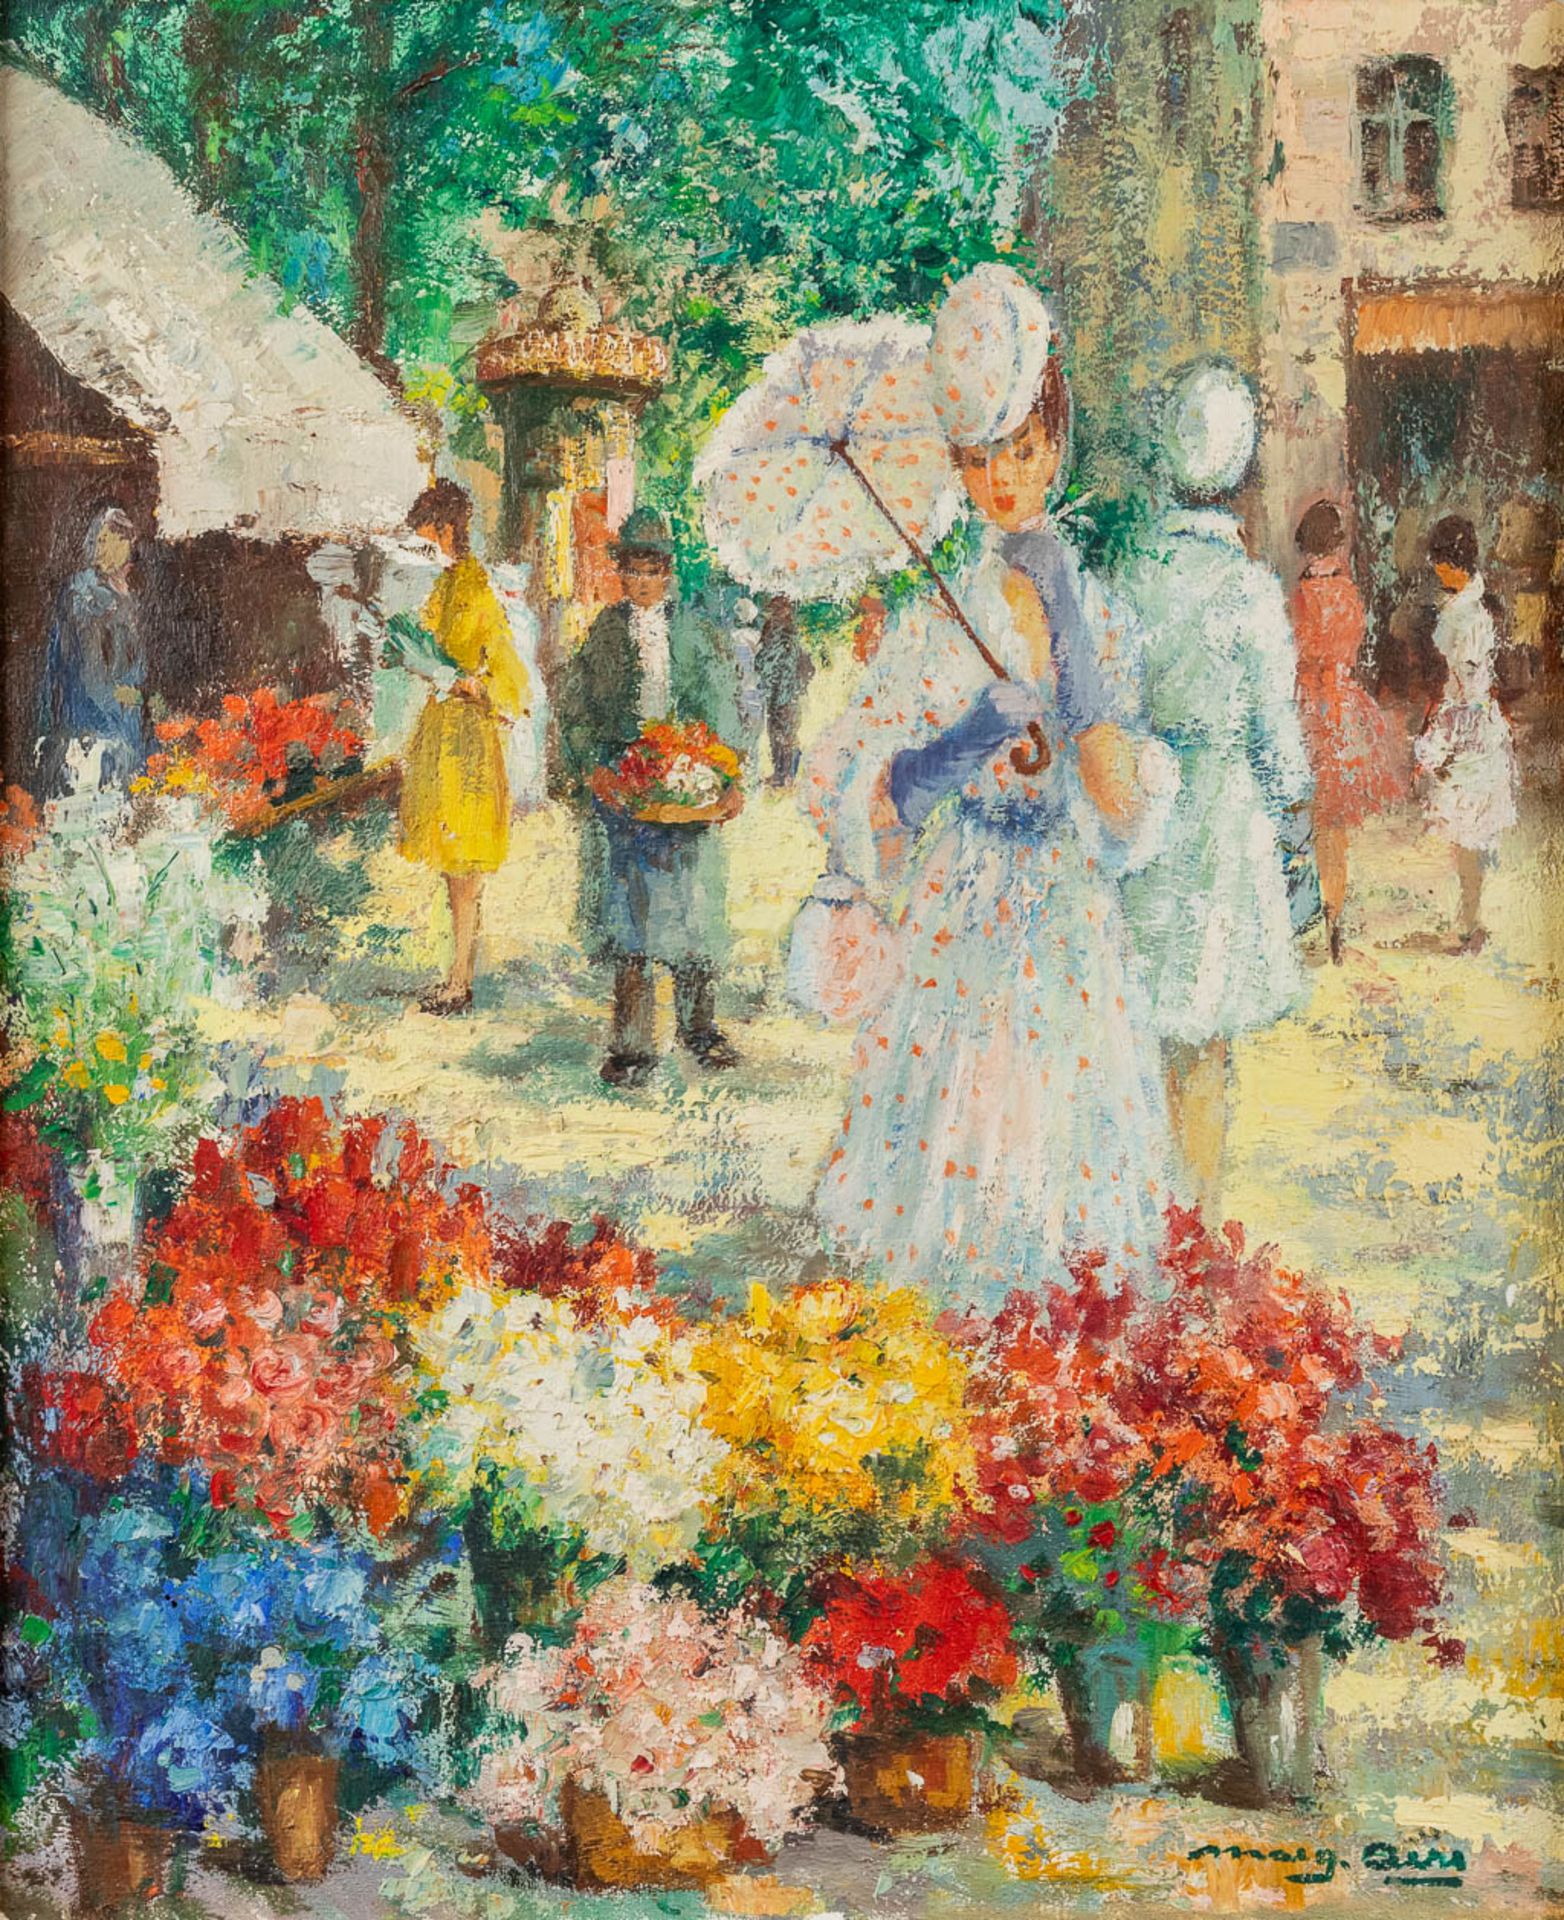 Marguerite AERS (1918-1995) 'The Flower Market' oil on canvas. (W:45 x H:55 cm)